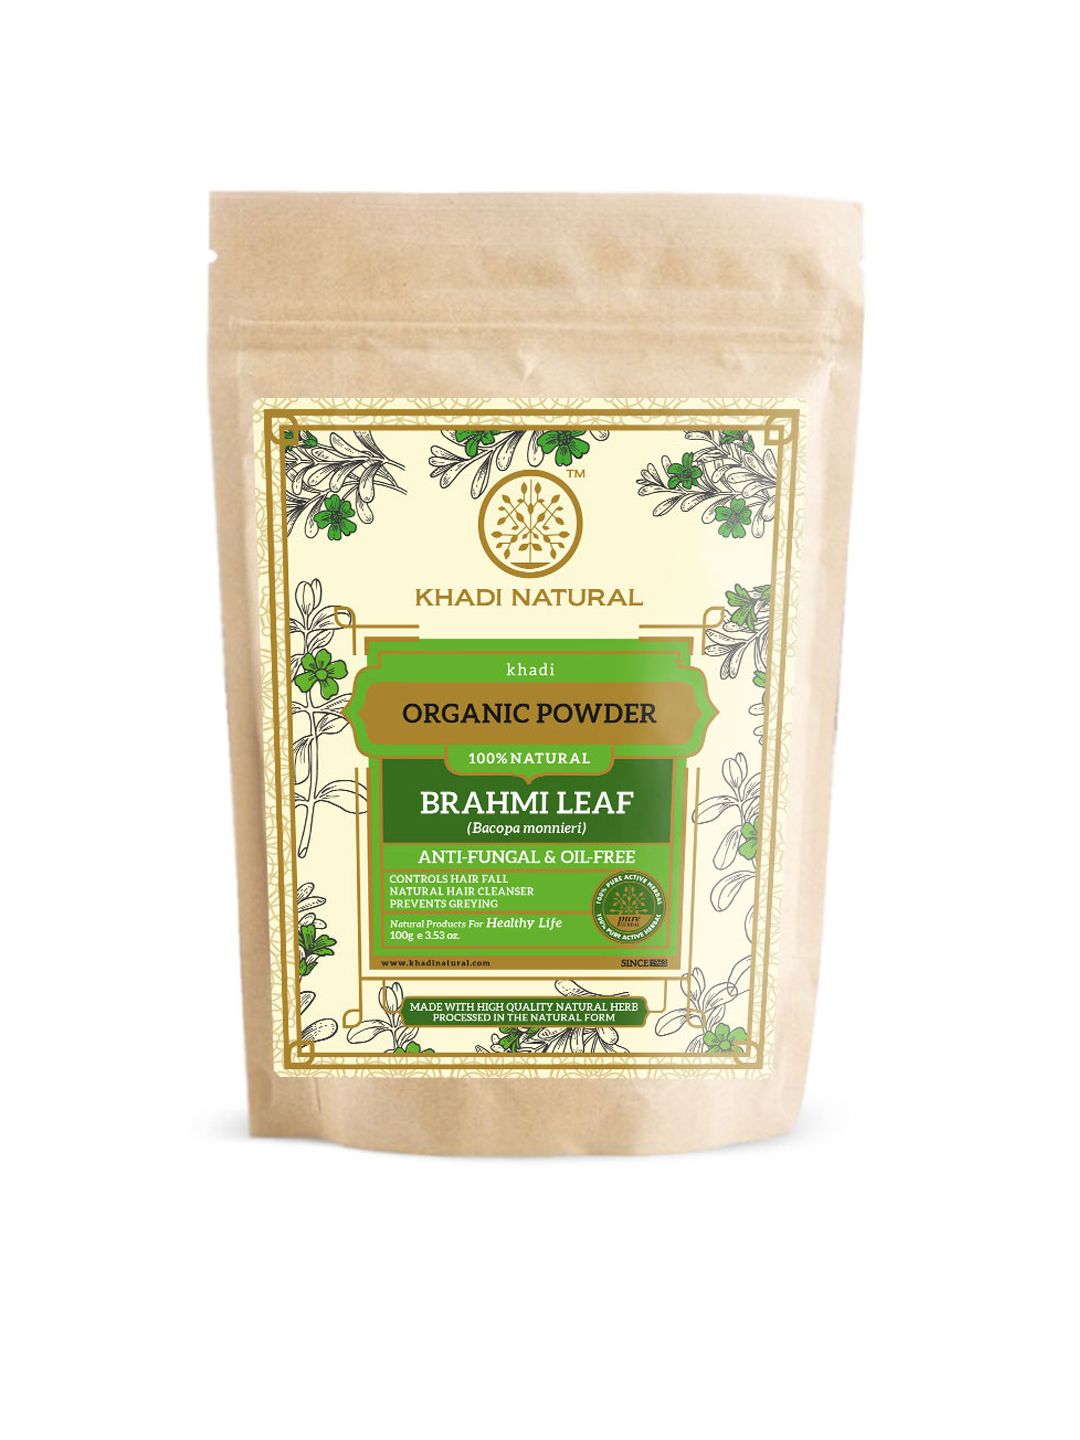 Khadi Natural Herbal Brahmi Leaf organic Powder Price in India